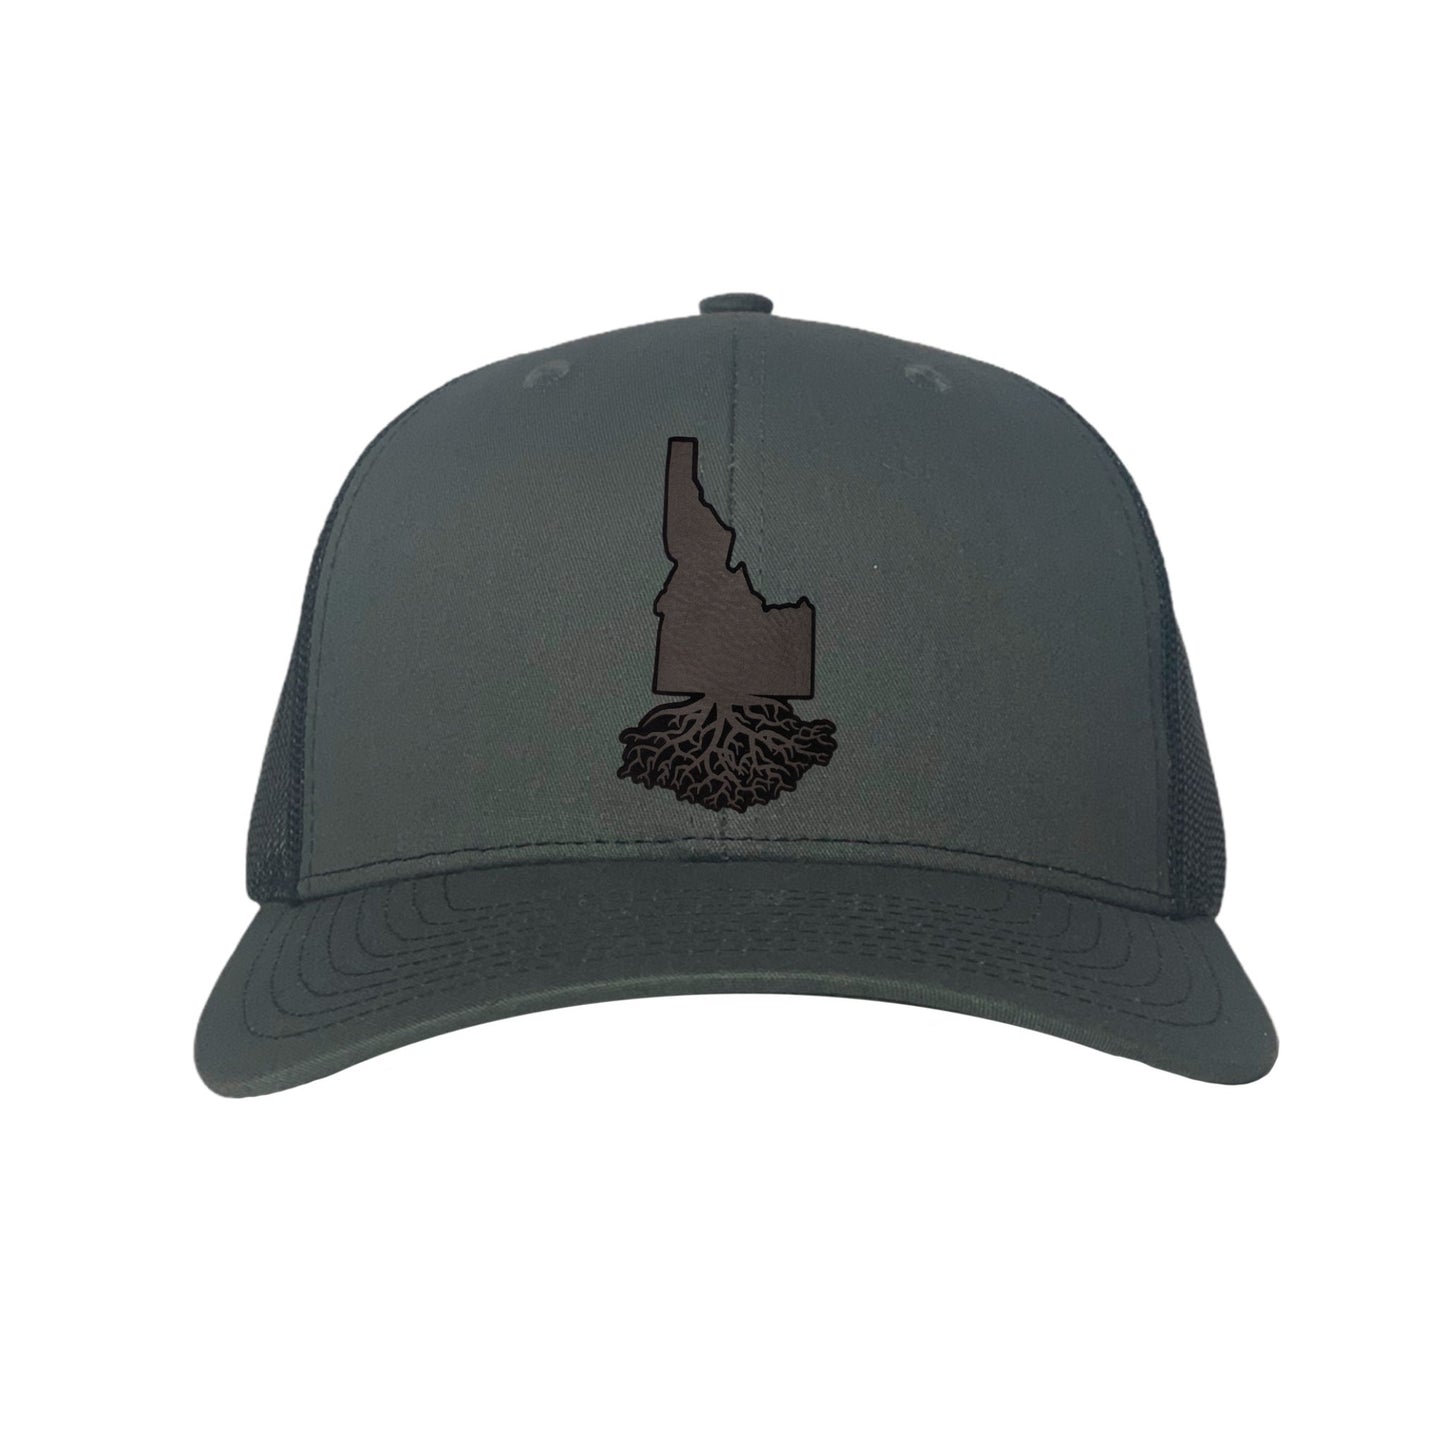 Idaho Roots Patch Trucker Hat - Hats